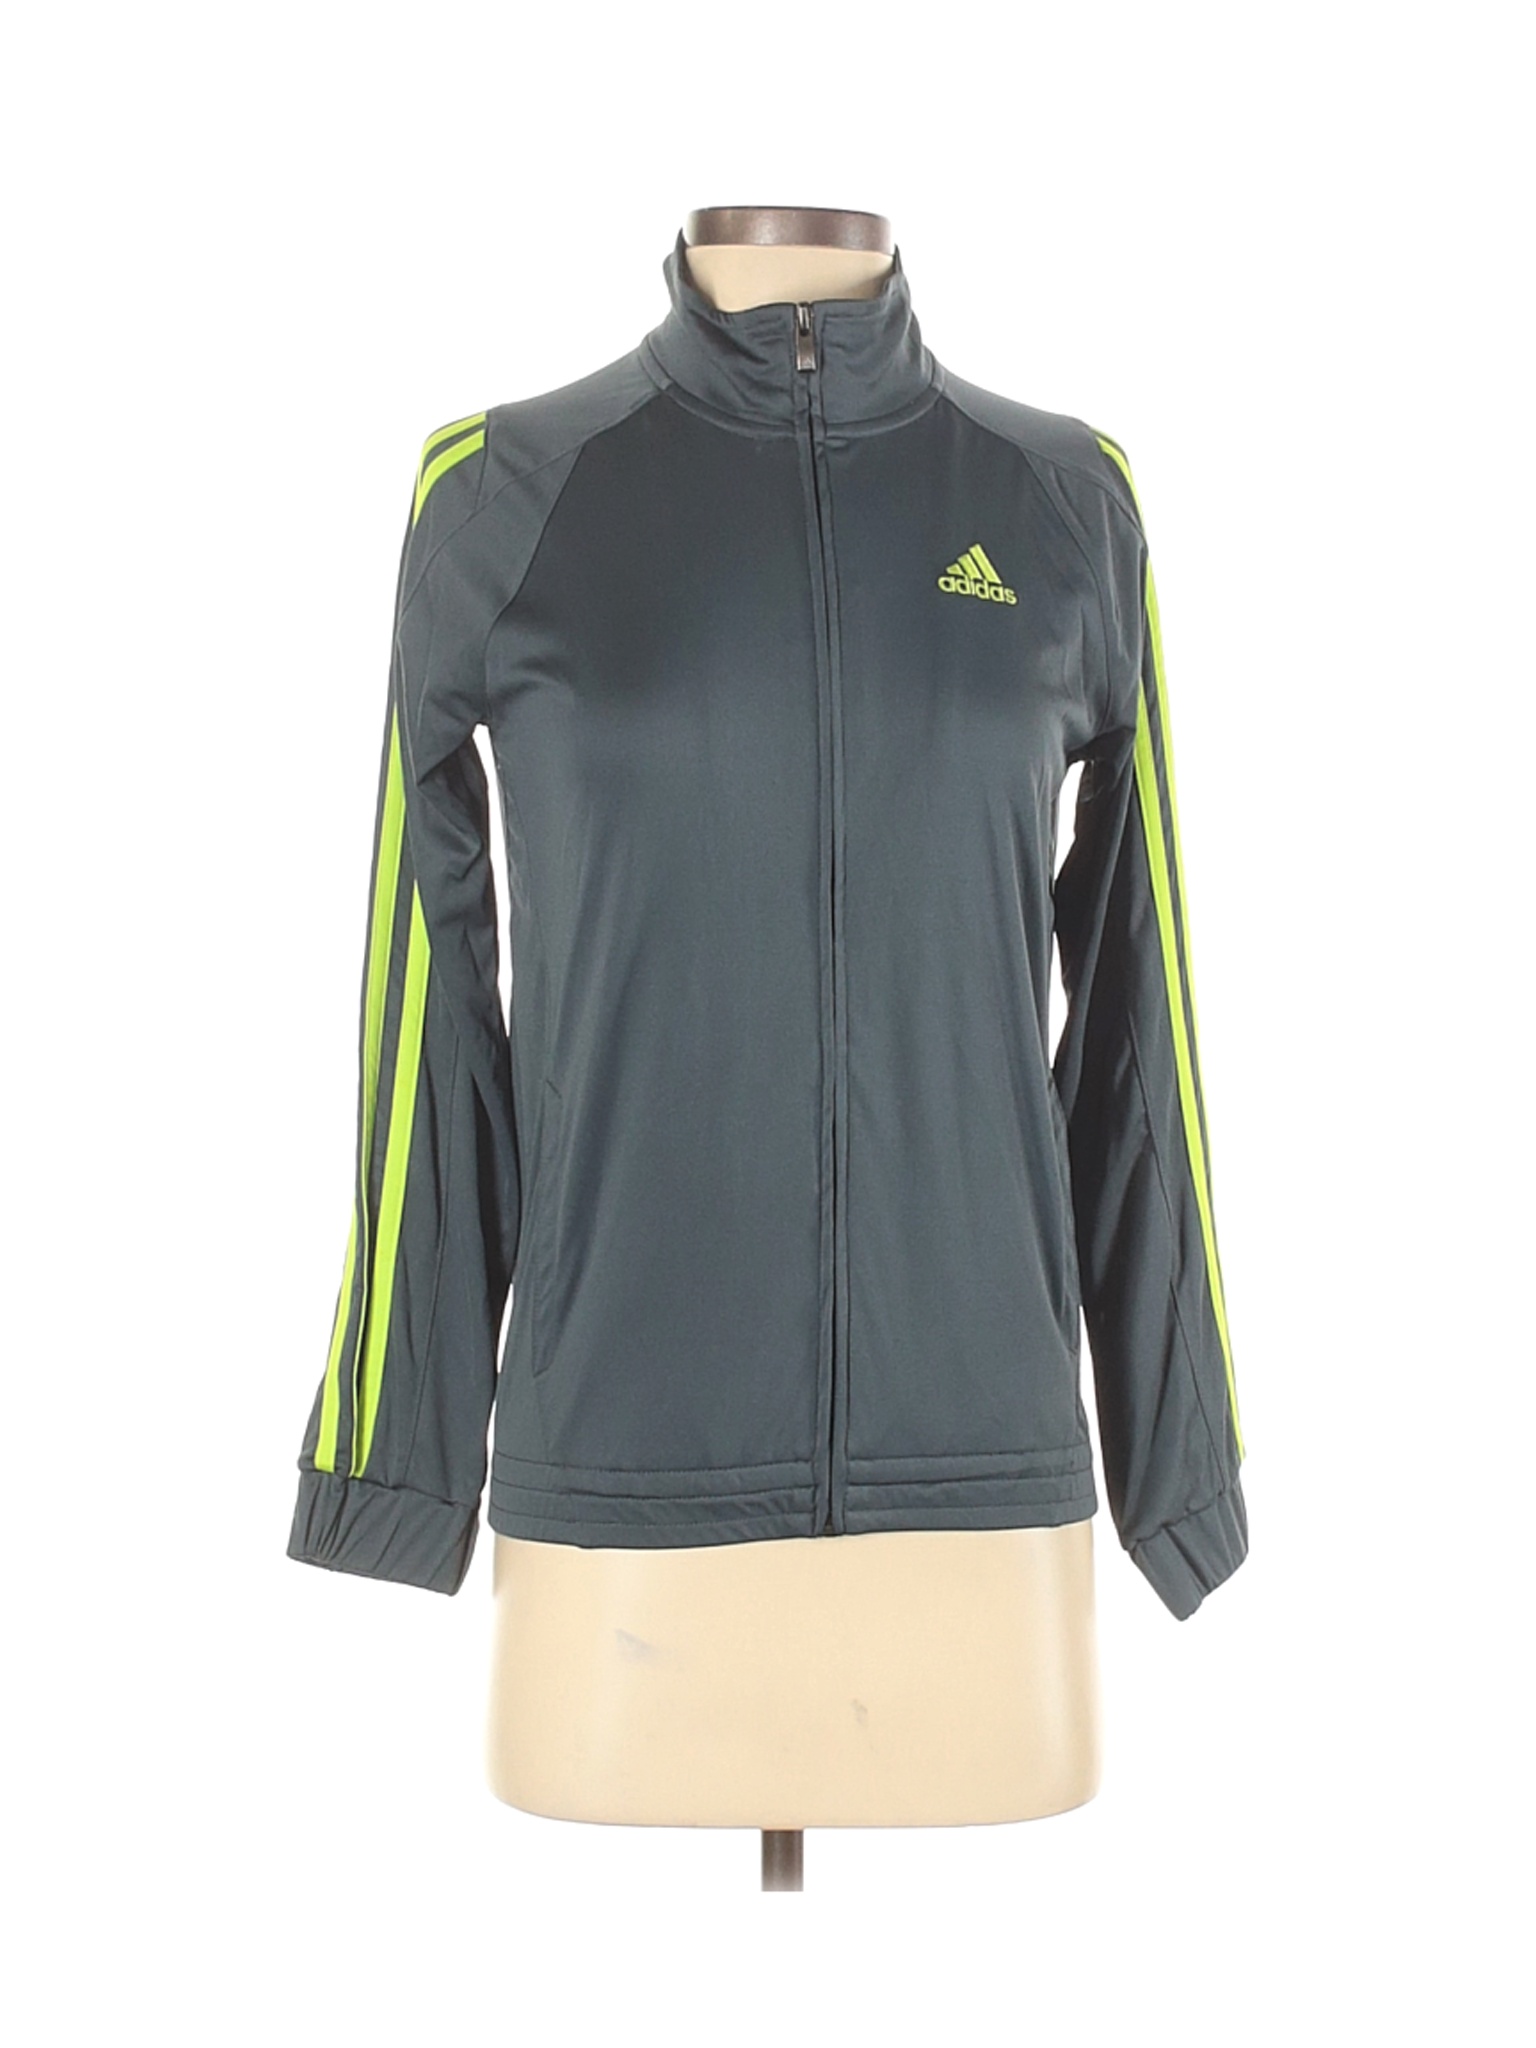 Adidas Women Gray Track Jacket M | eBay